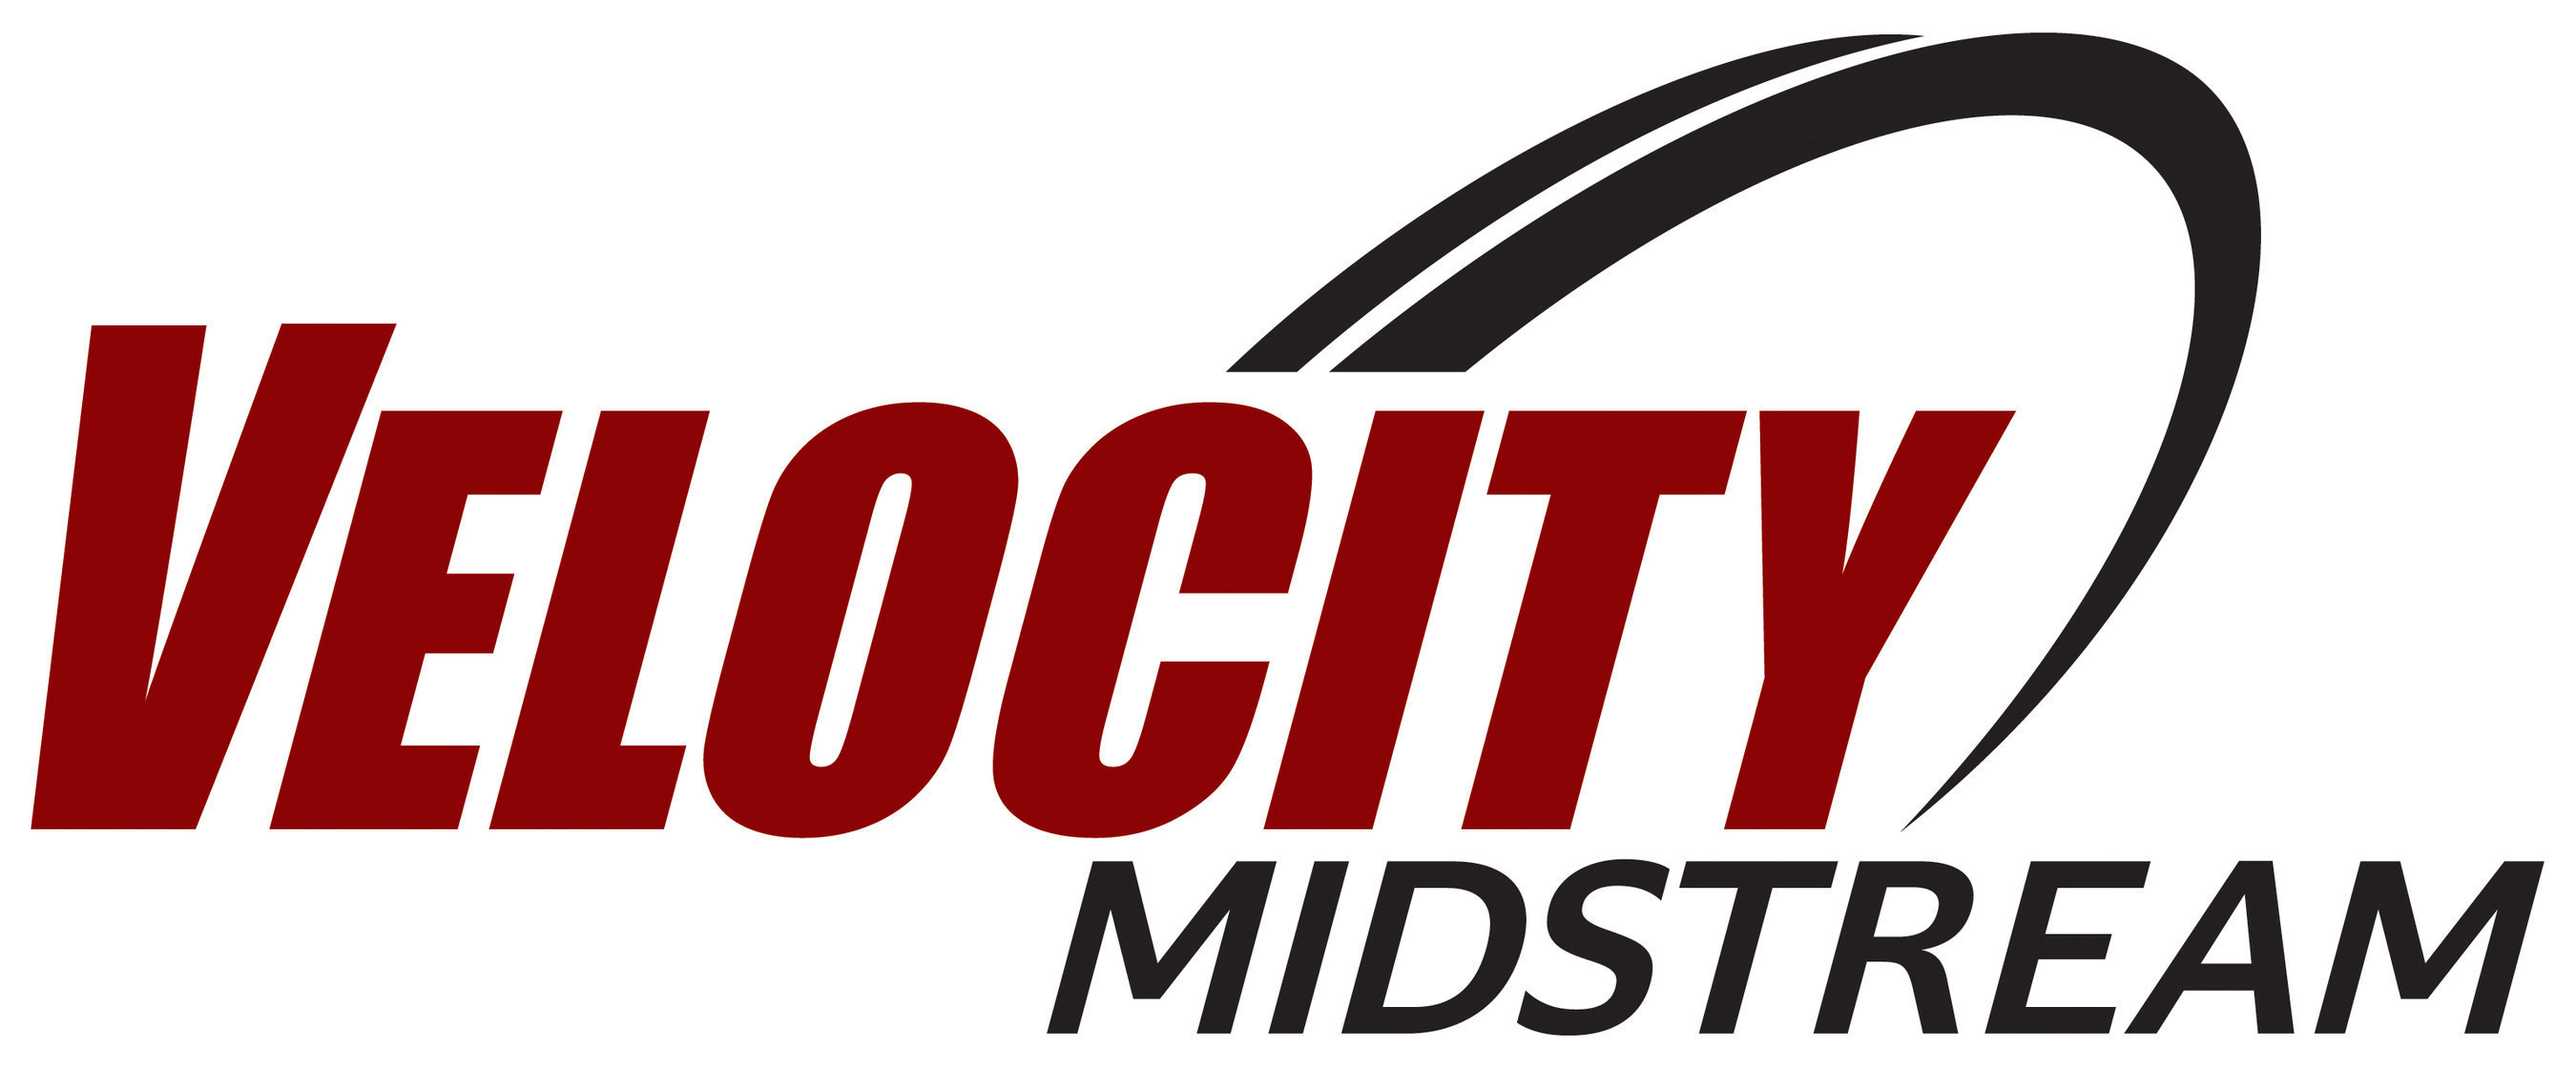 Velocity Midstream Partners, LLC logo